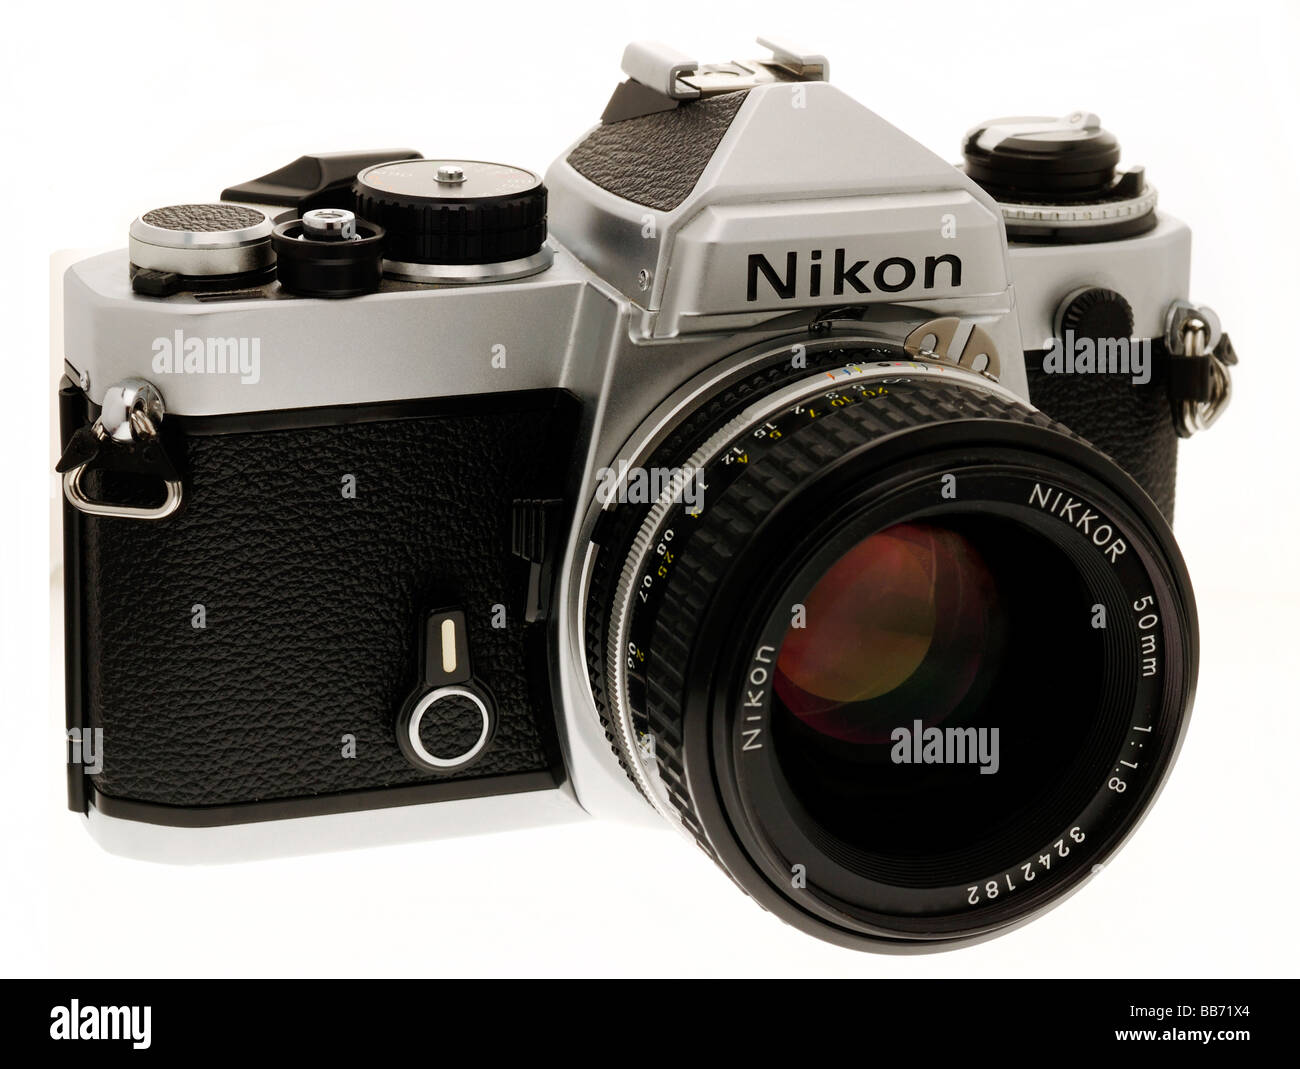 Nikon FE 35mm Single Lens Reflex Camera Stock Photo